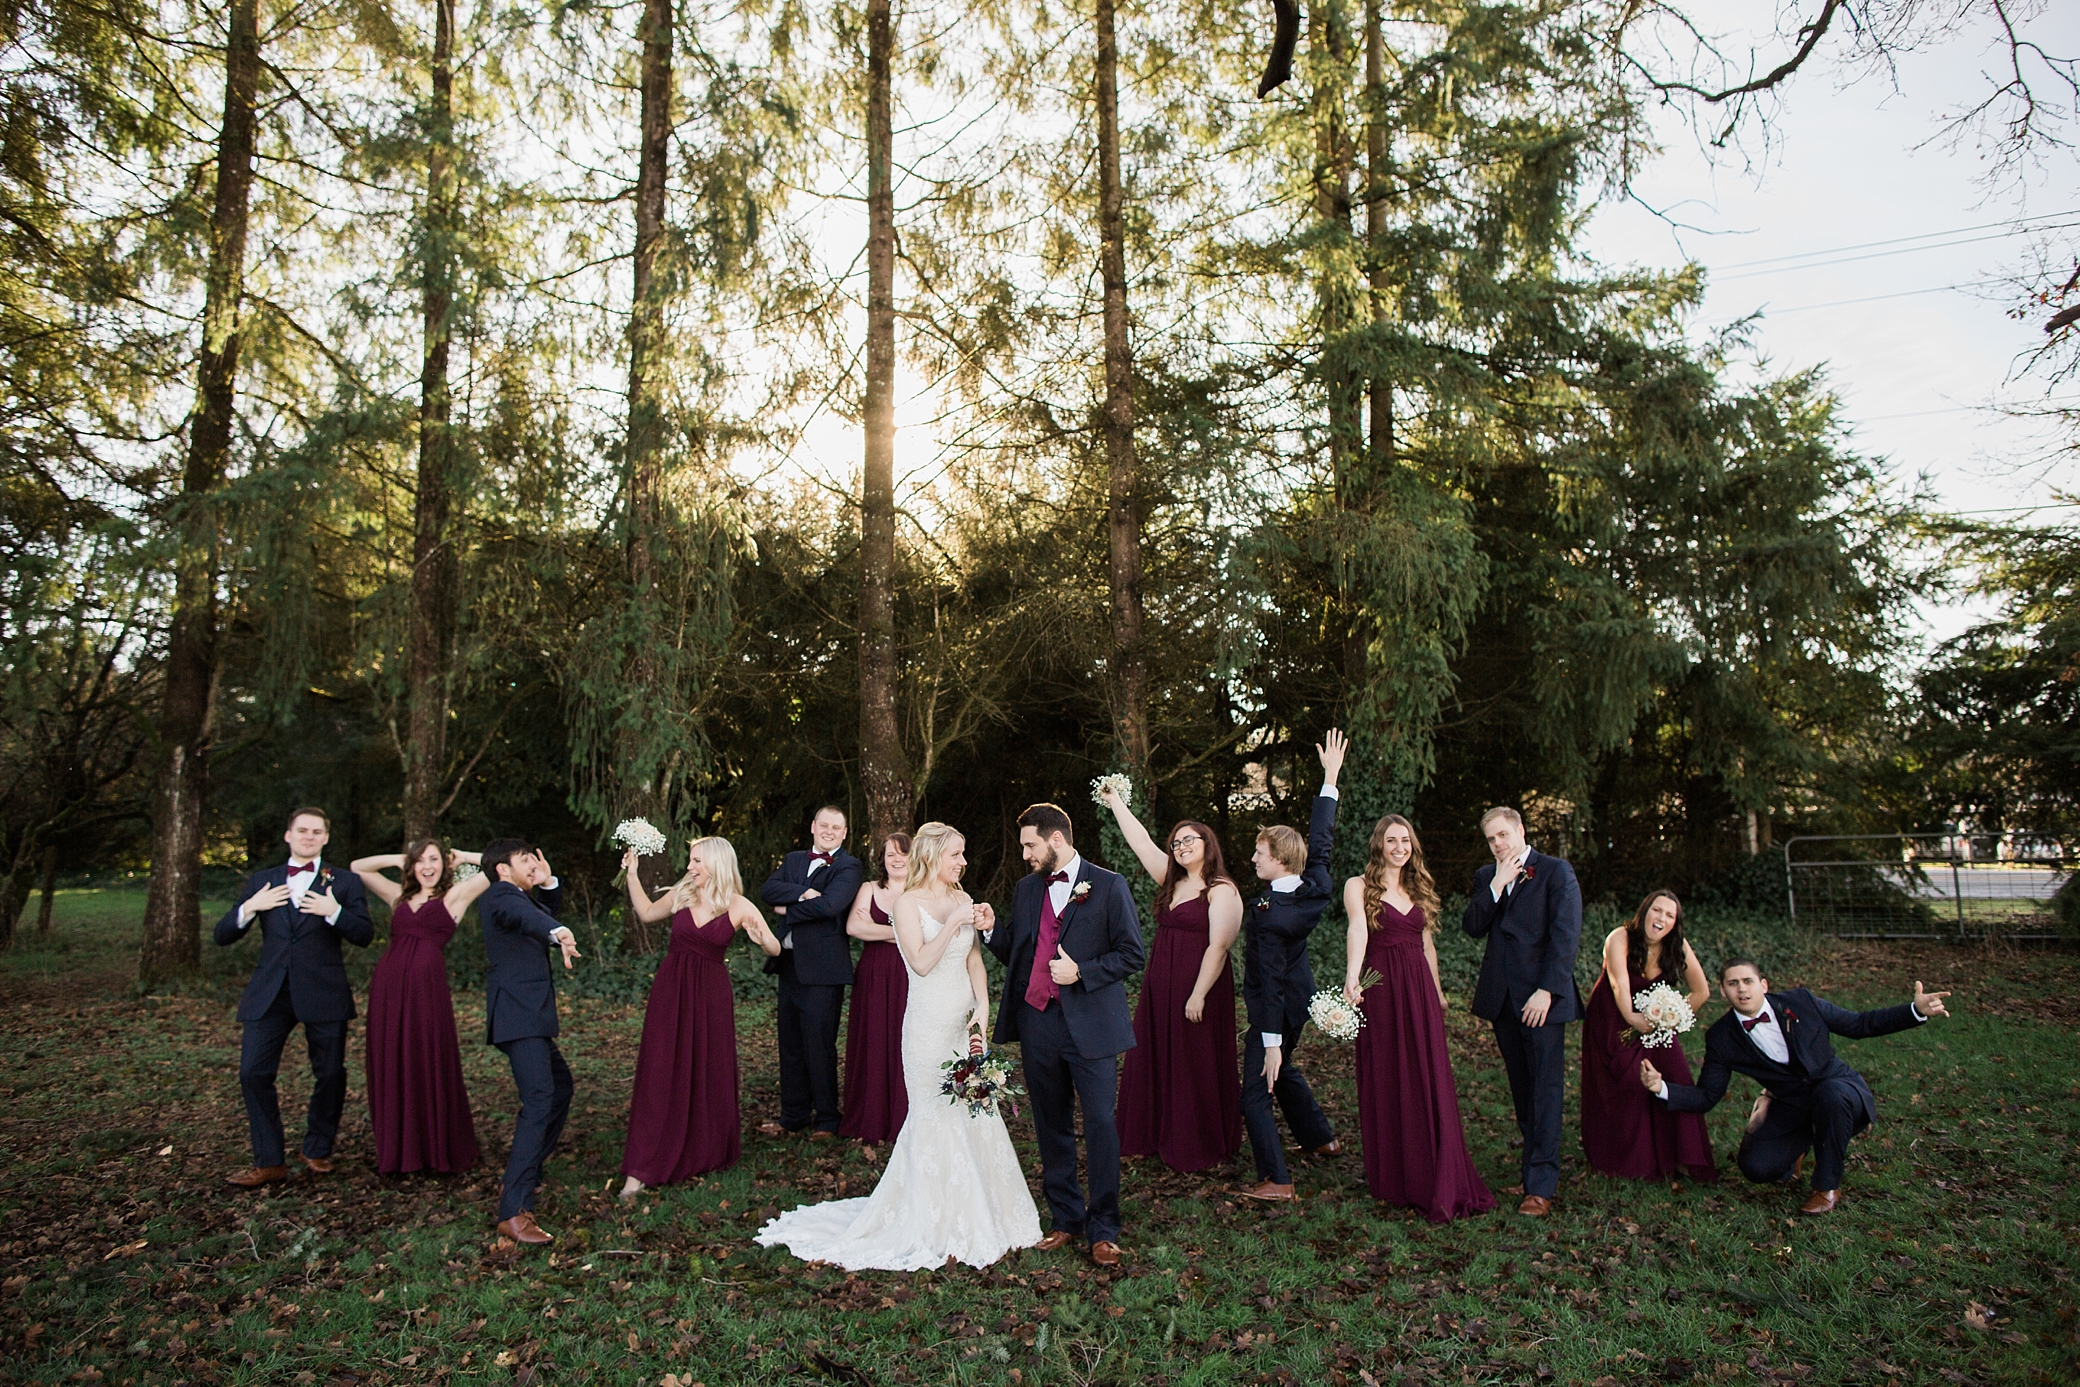 Wedding party having fun | Megan Montalvo Photography 